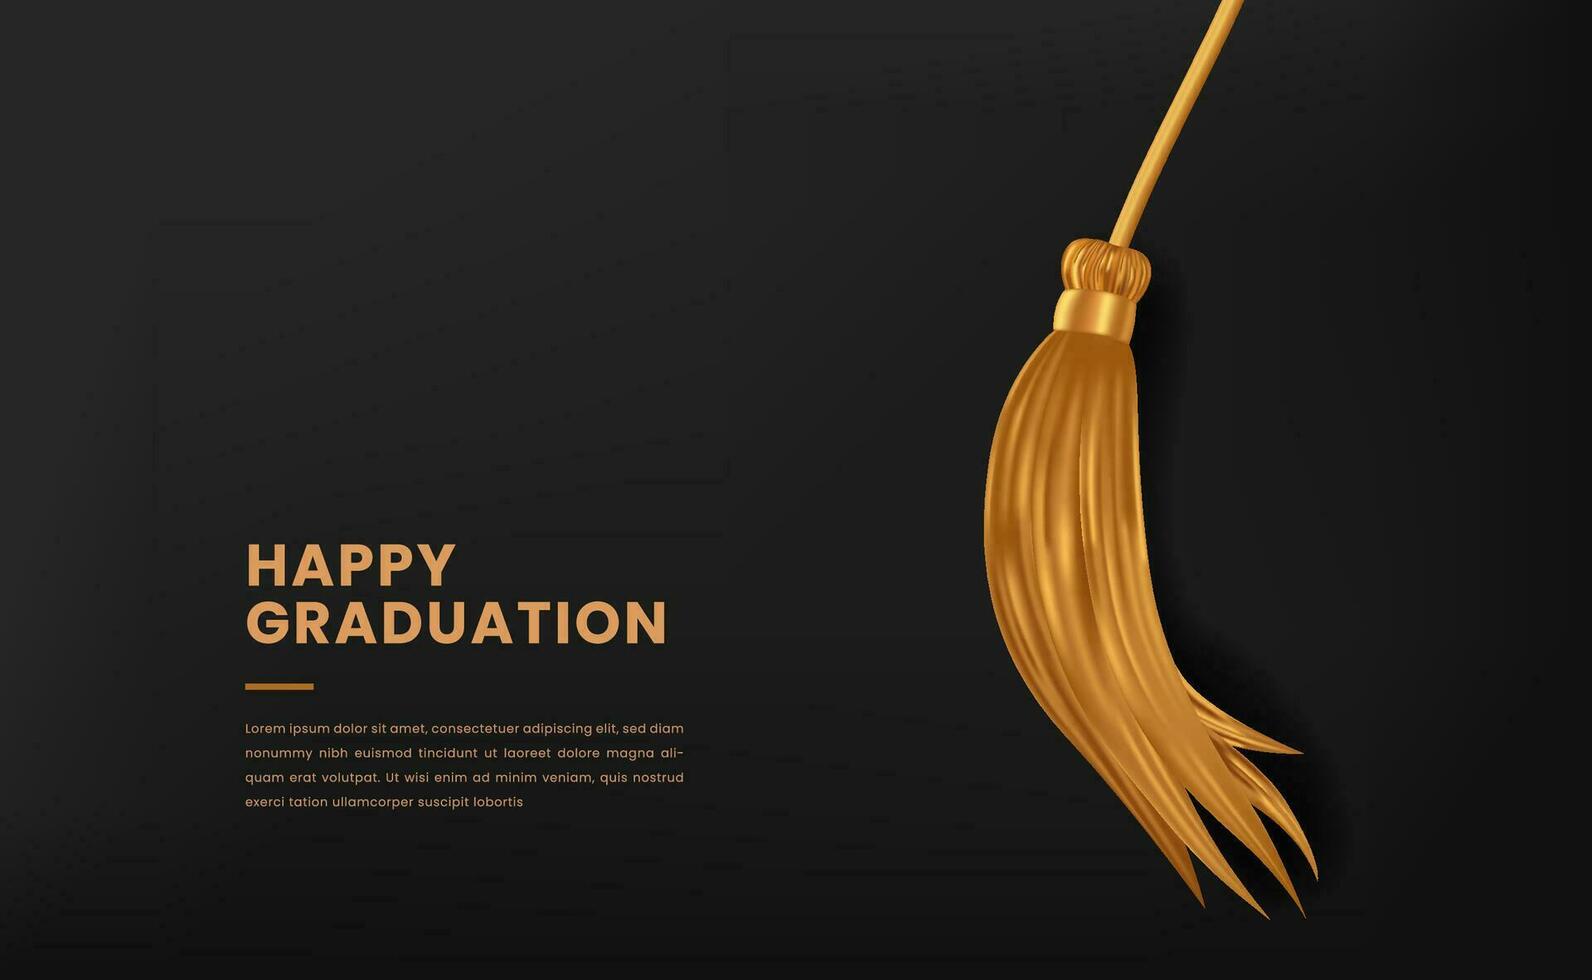 contento graduación fiesta celebracion invitación con oro borla graduado collage con negro antecedentes vector